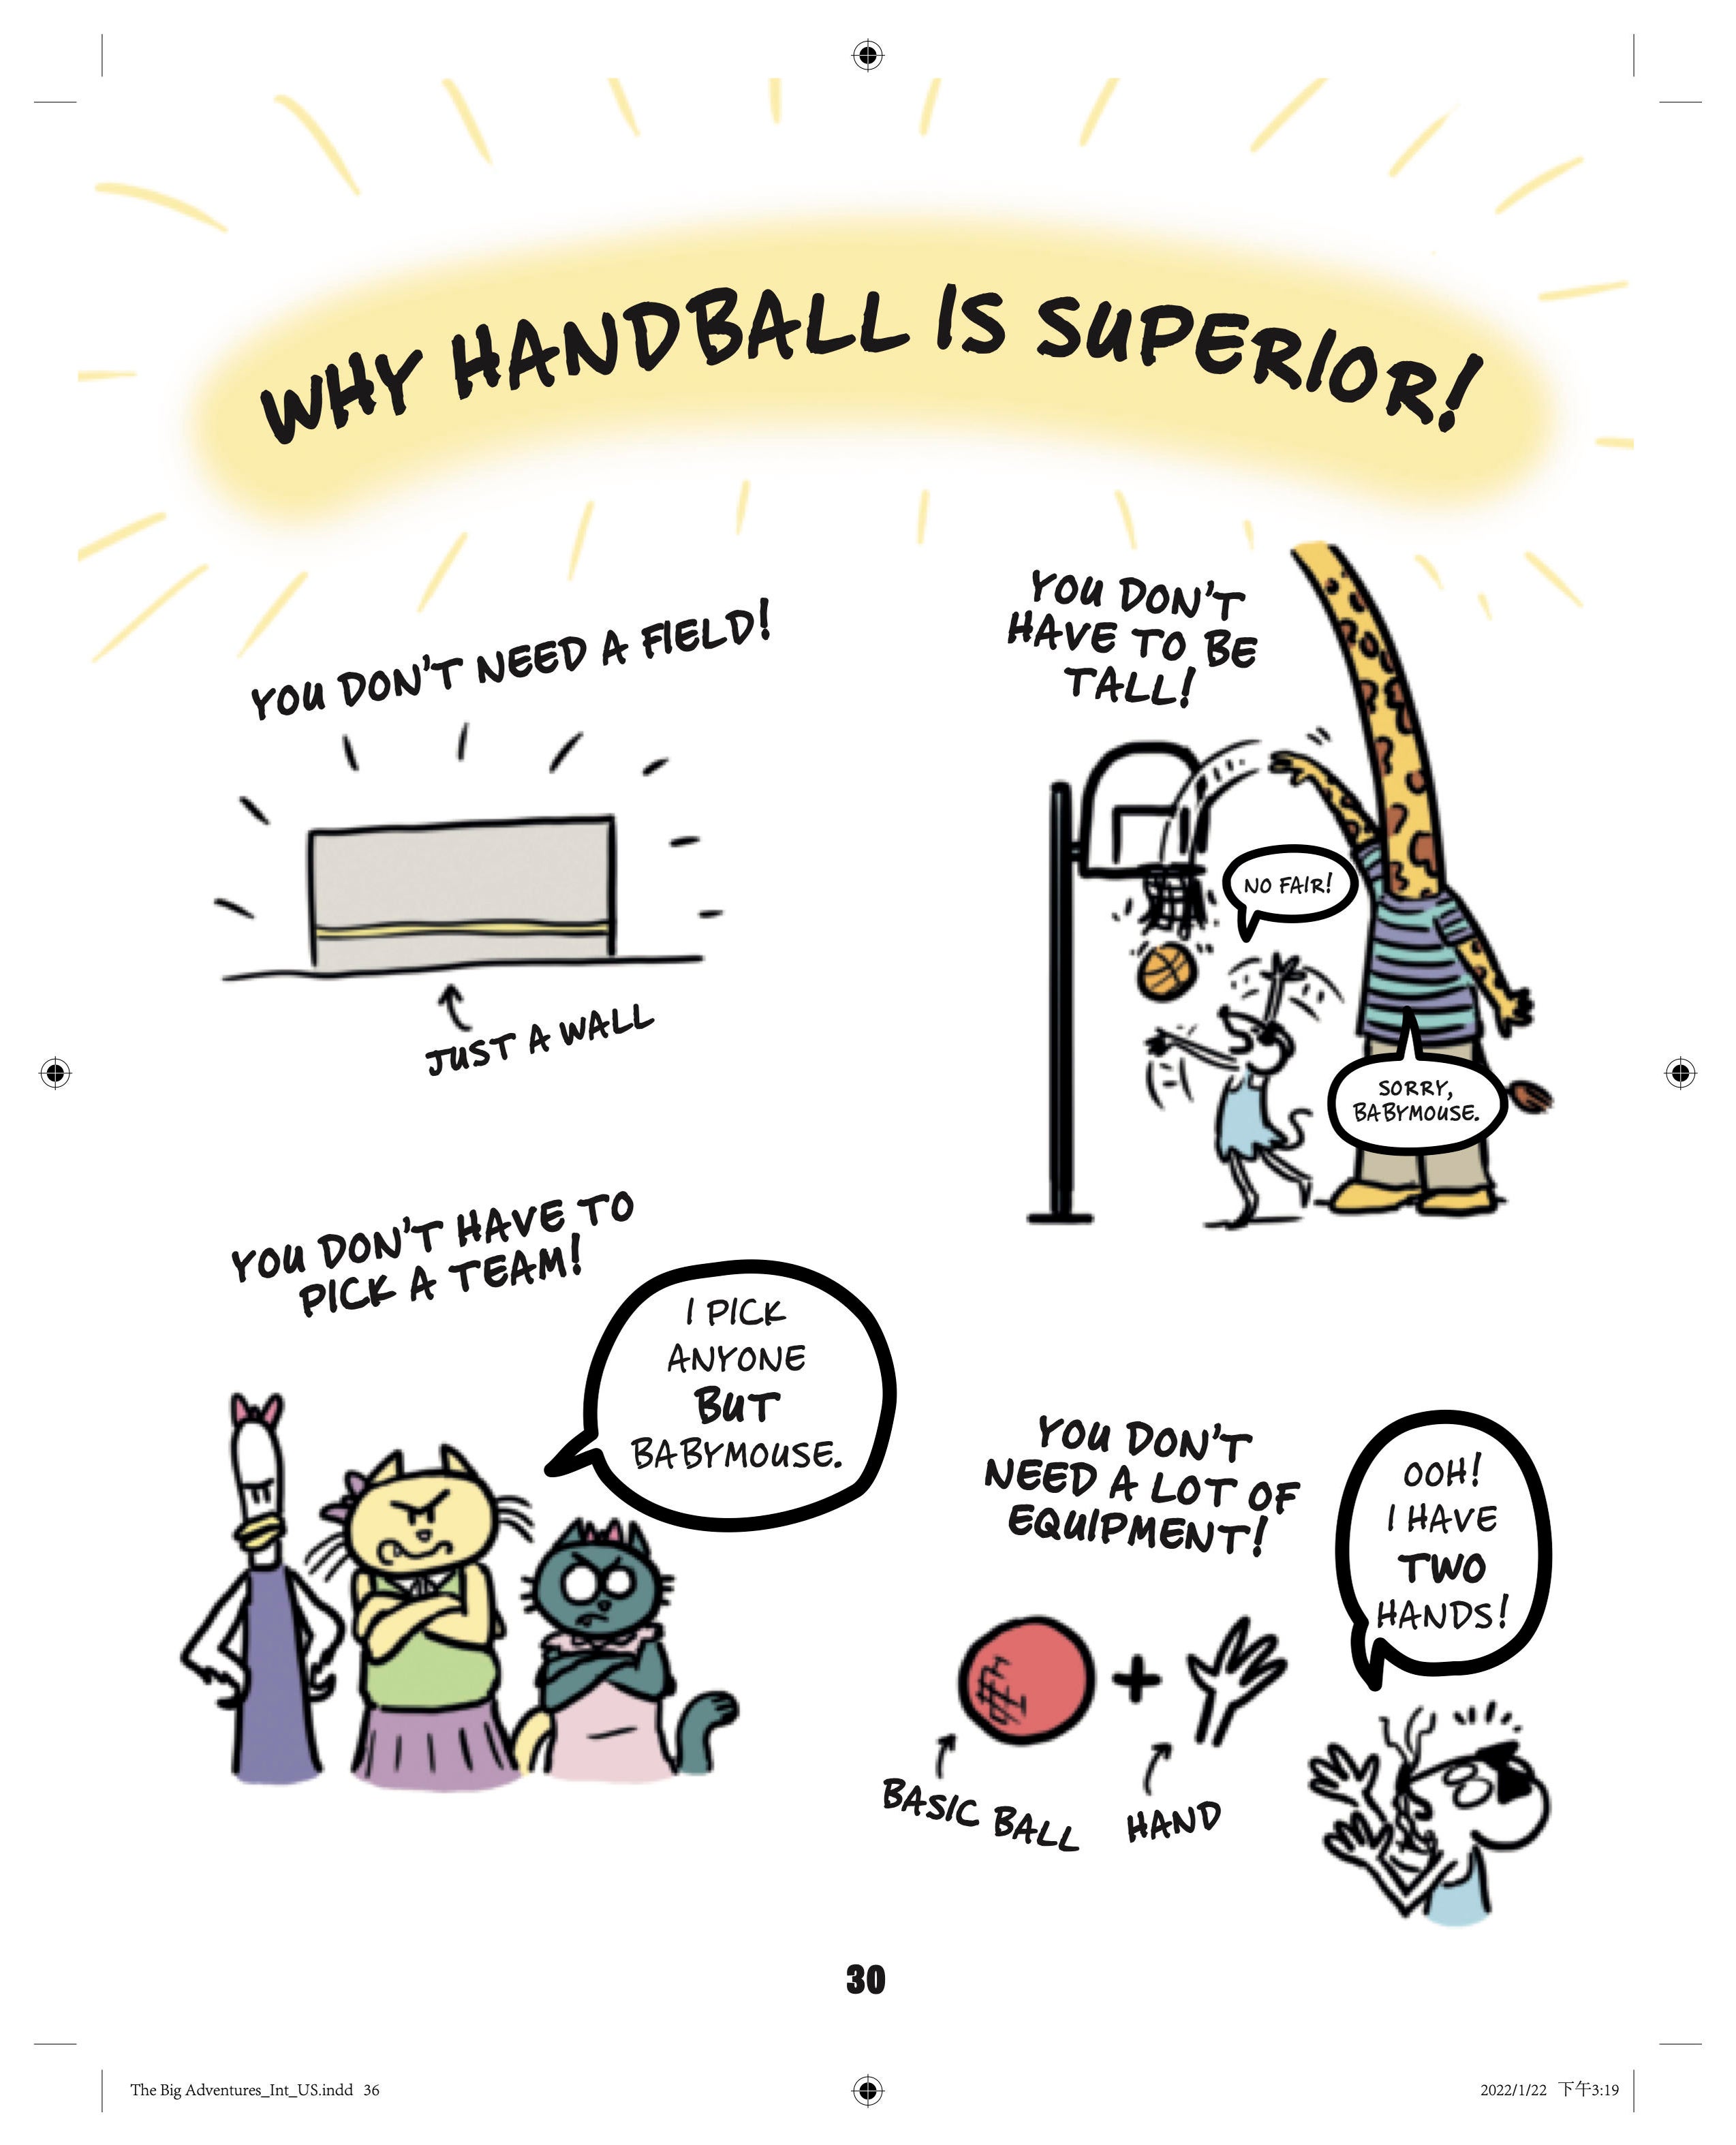 once-upon-a-messy-whisker-p-30-handball.jpg